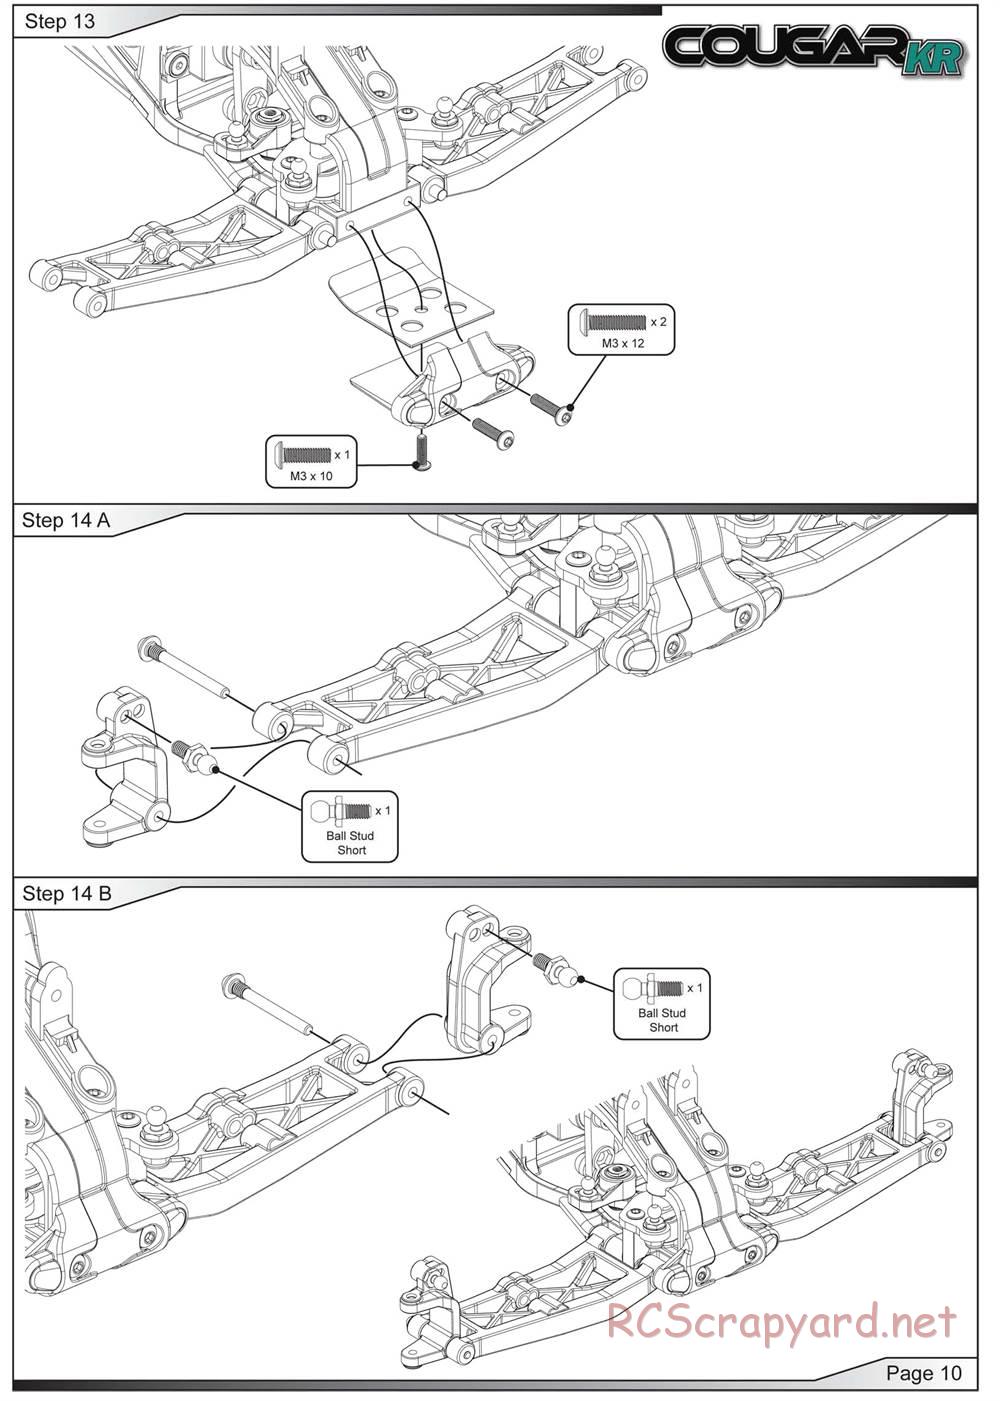 Schumacher - Cougar KR - Manual - Page 11